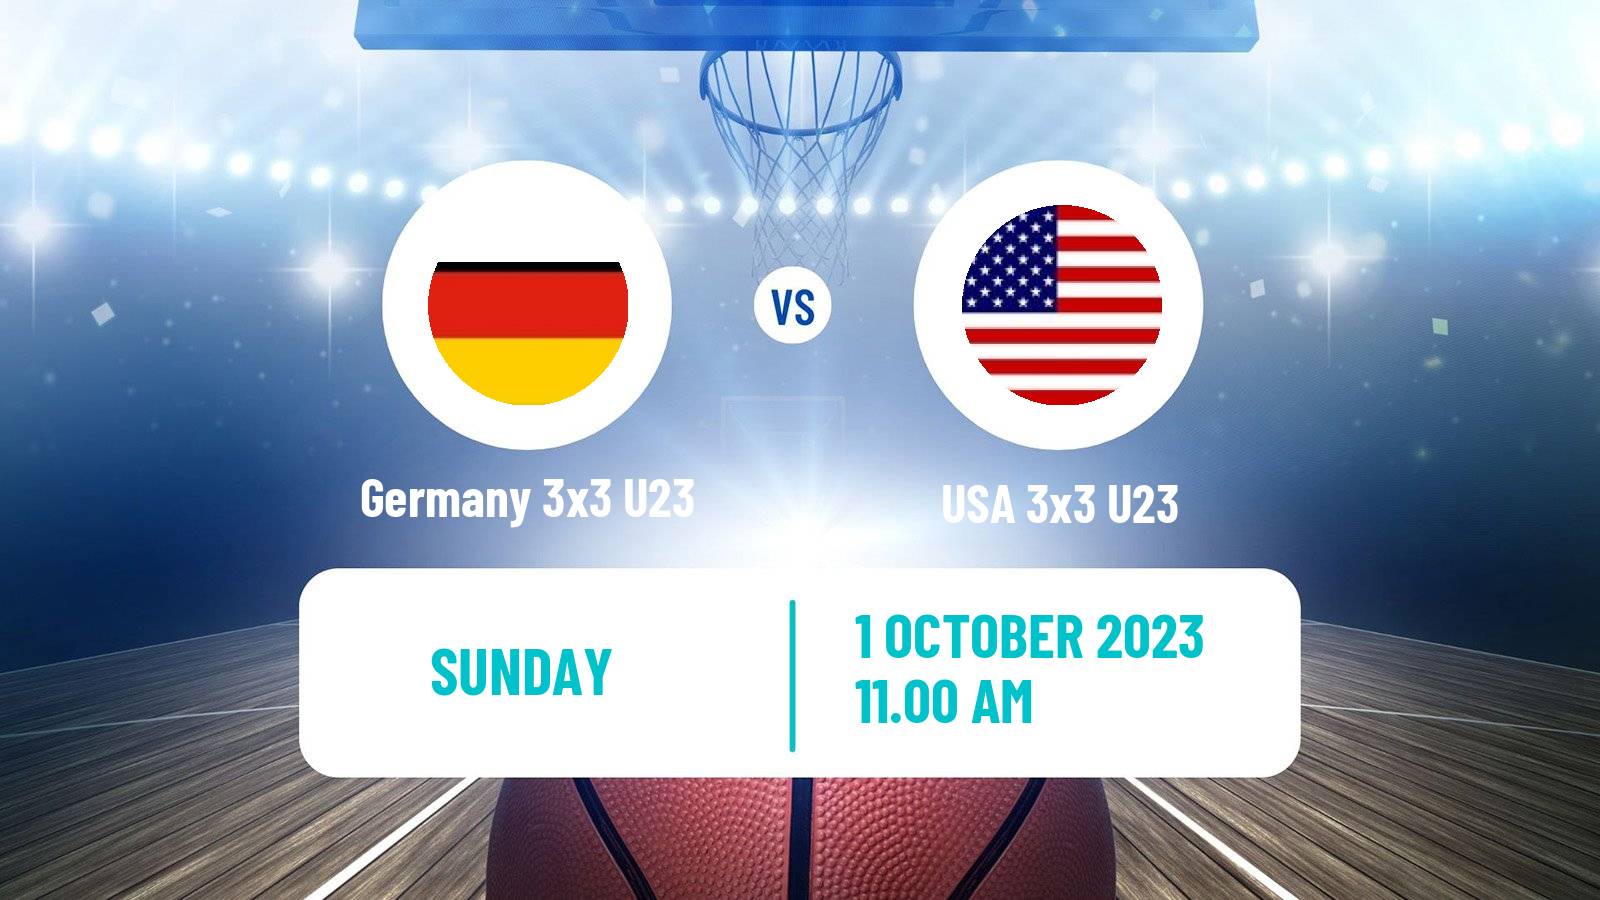 Basketball World Cup Basketball 3x3 U23 Germany 3x3 U23 - USA 3x3 U23